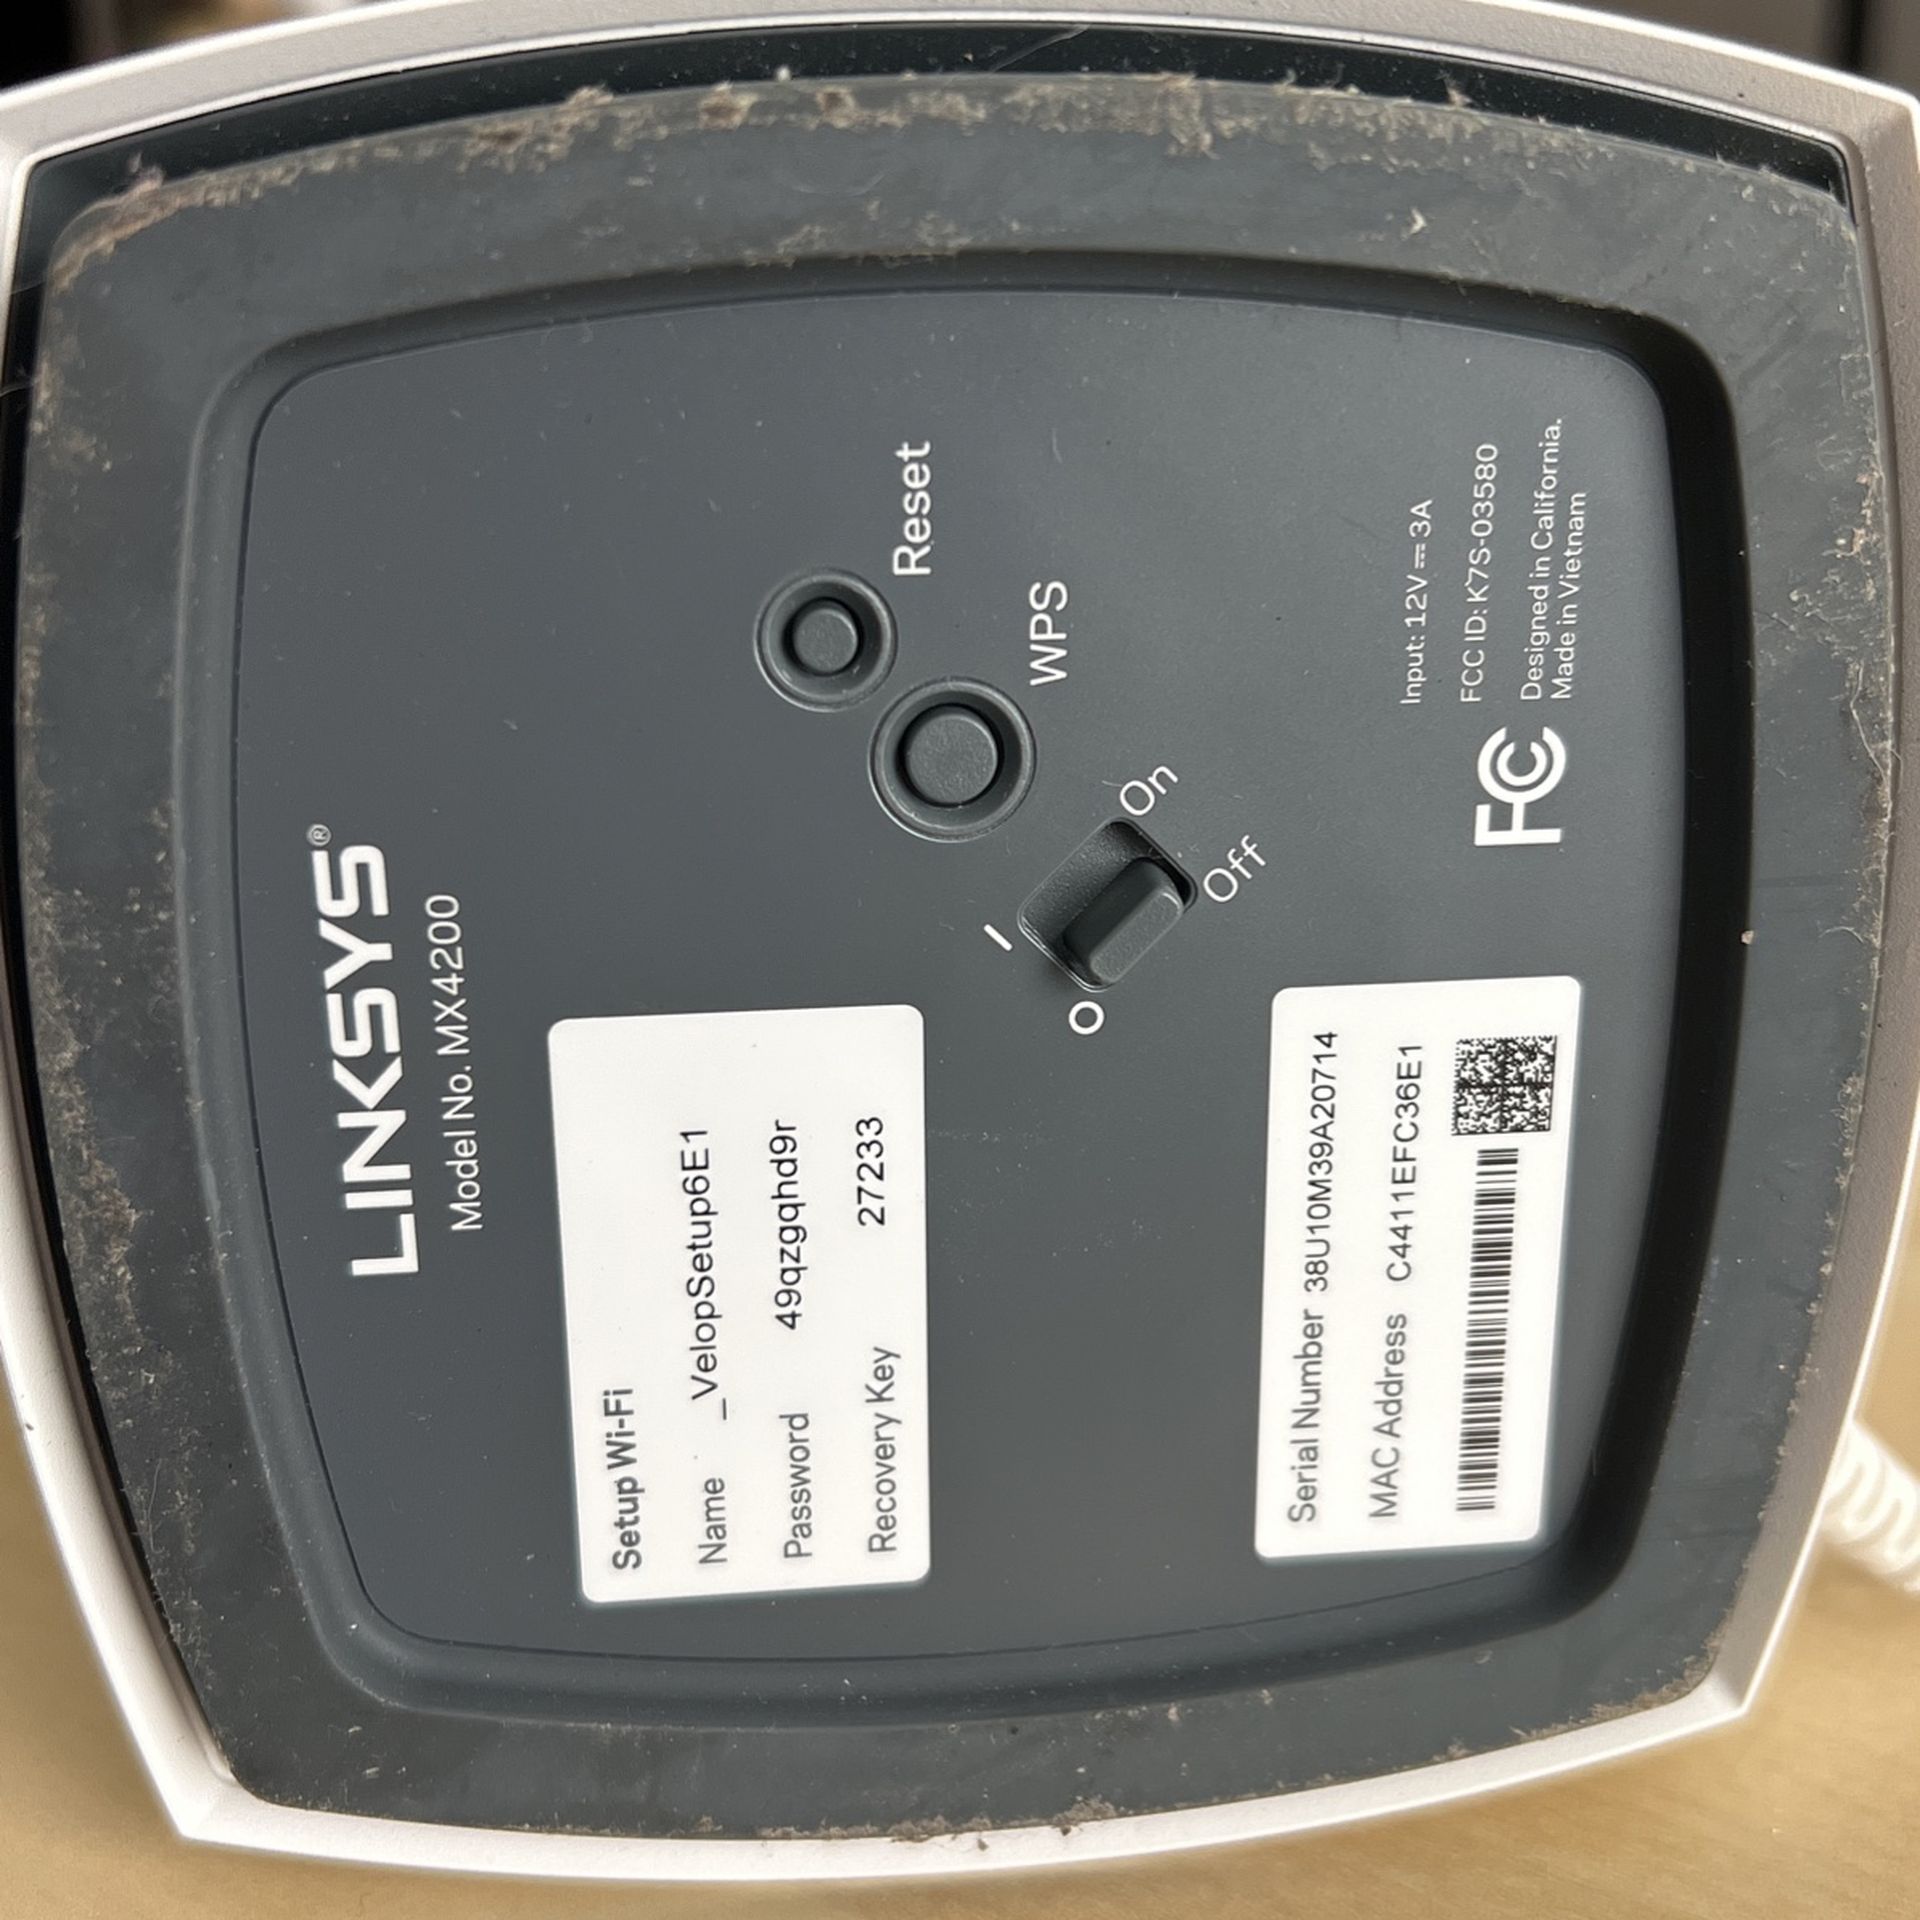 Linksys Mx4200 Wireless Extender